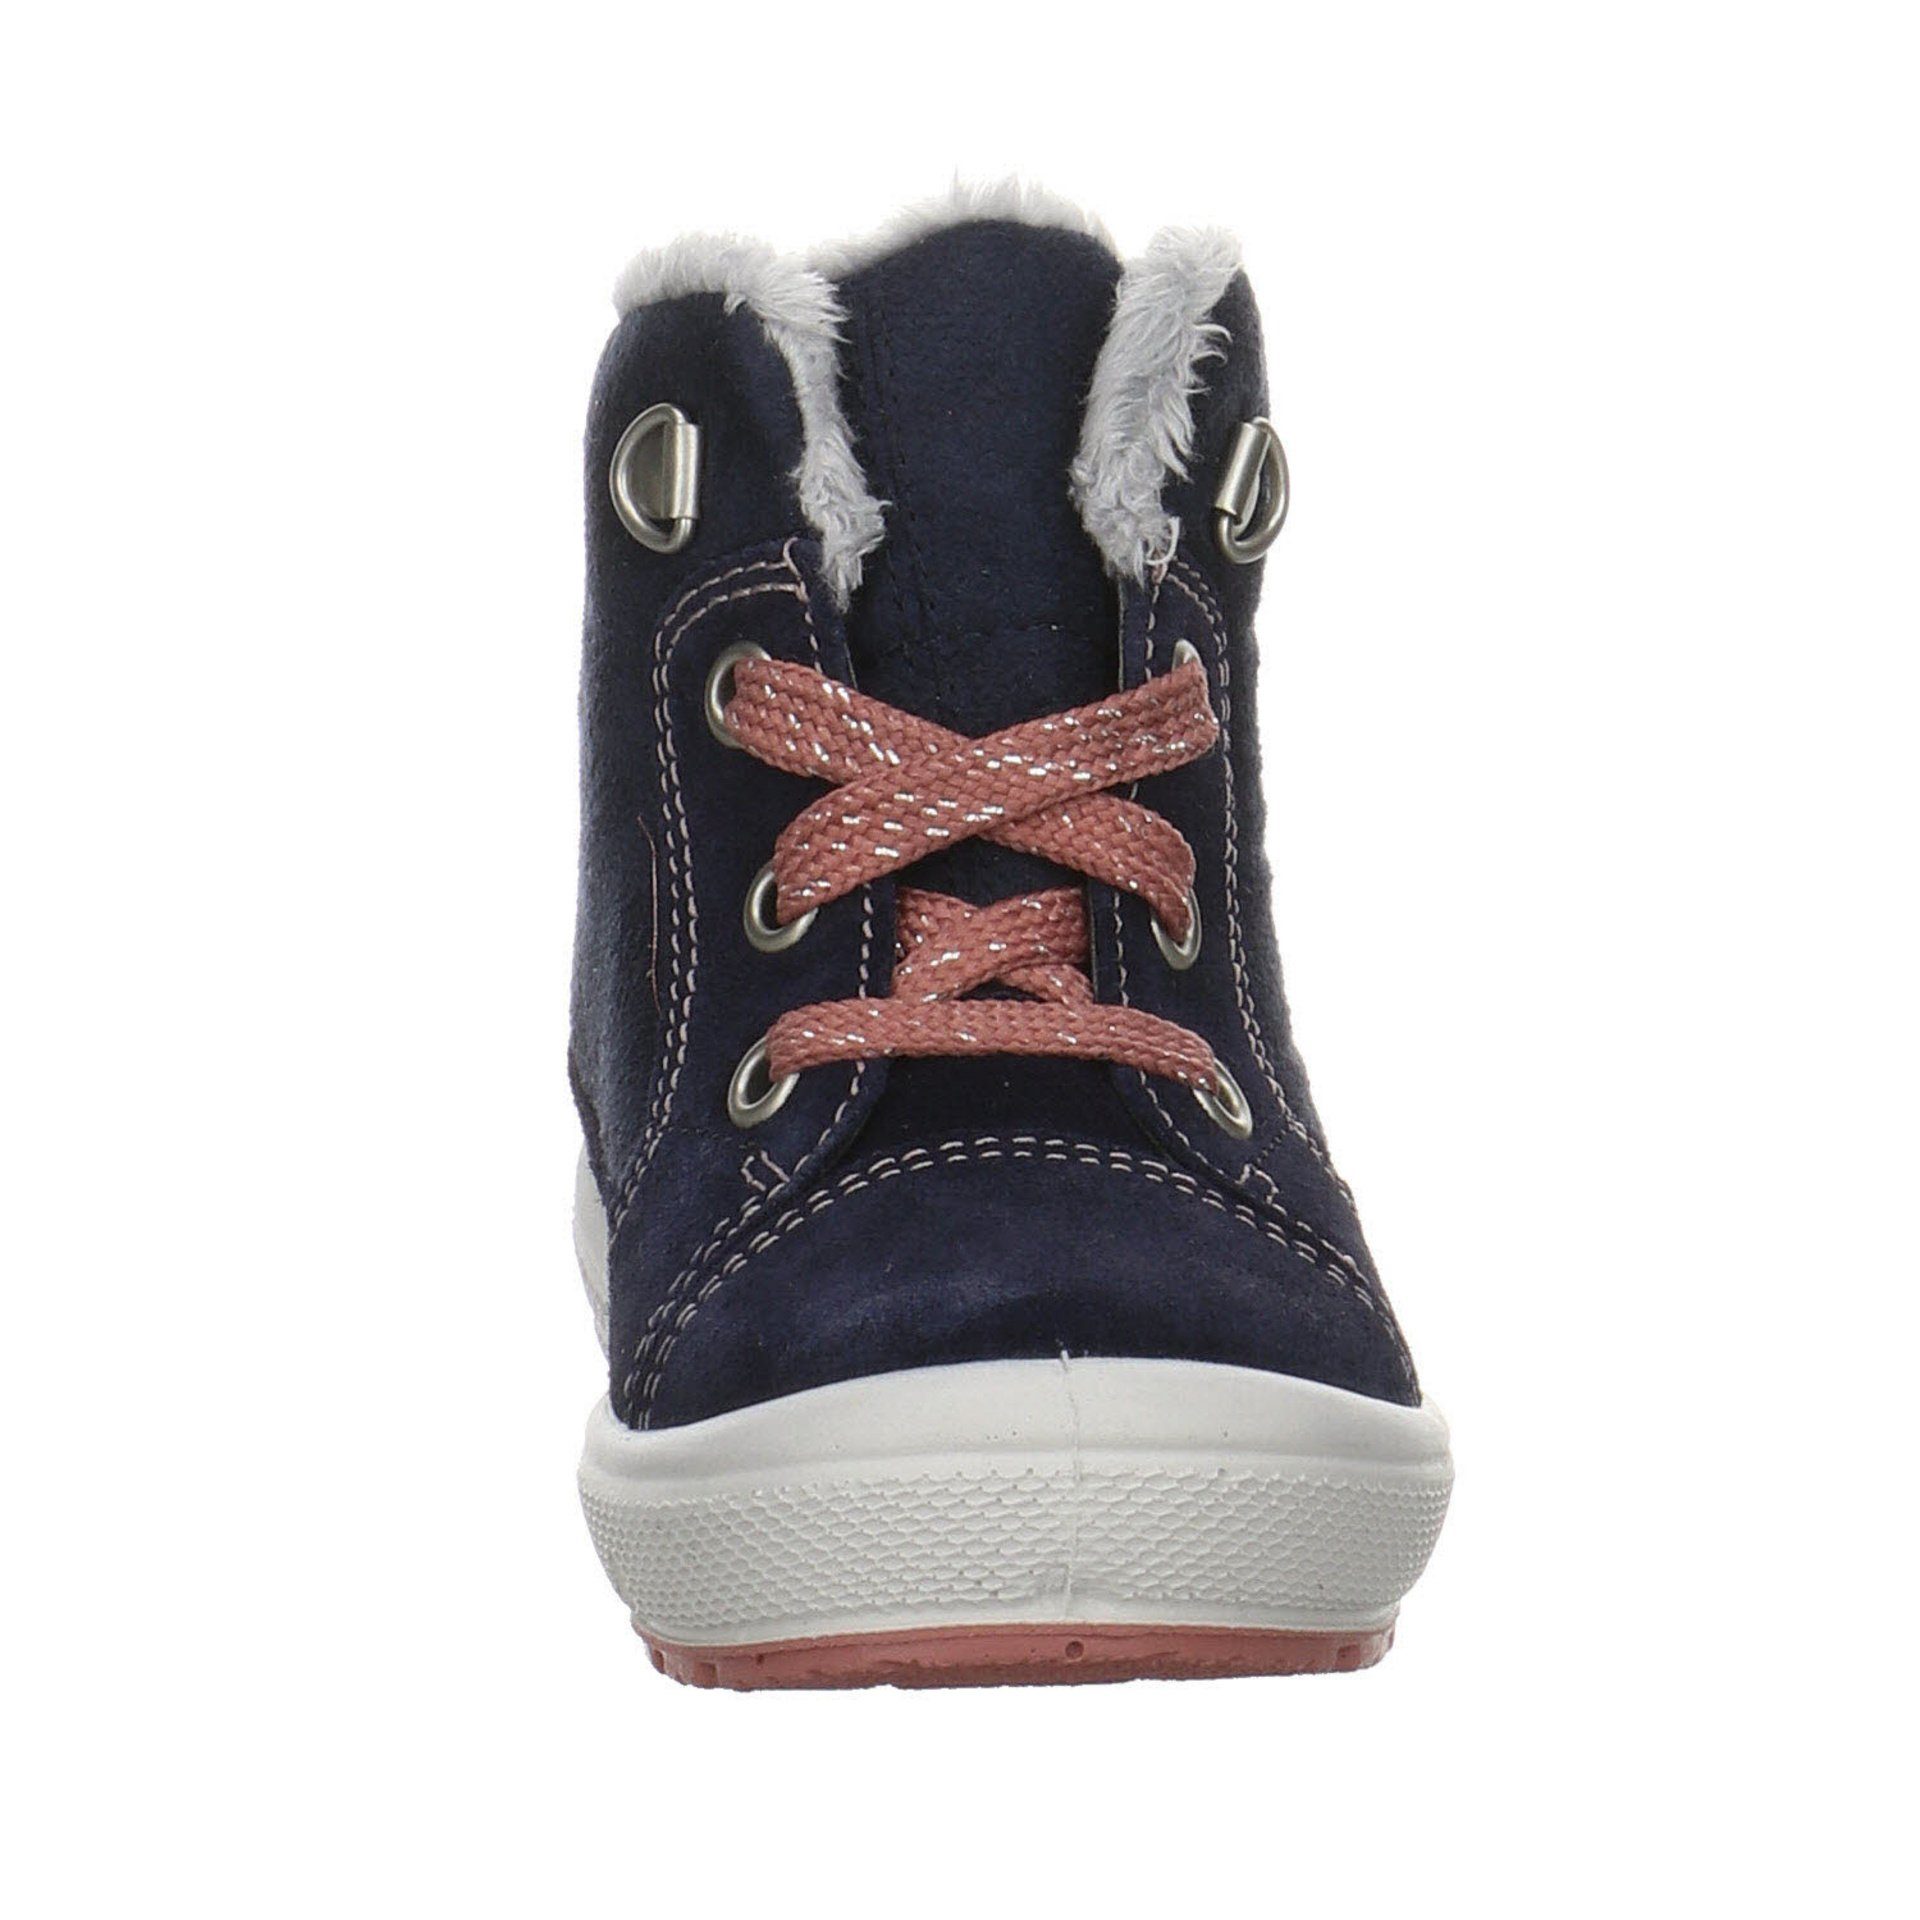 Superfit Baby Lauflernschuhe Krabbelschuhe Groovy Boots Leder-/Textilkombination Lauflernschuh